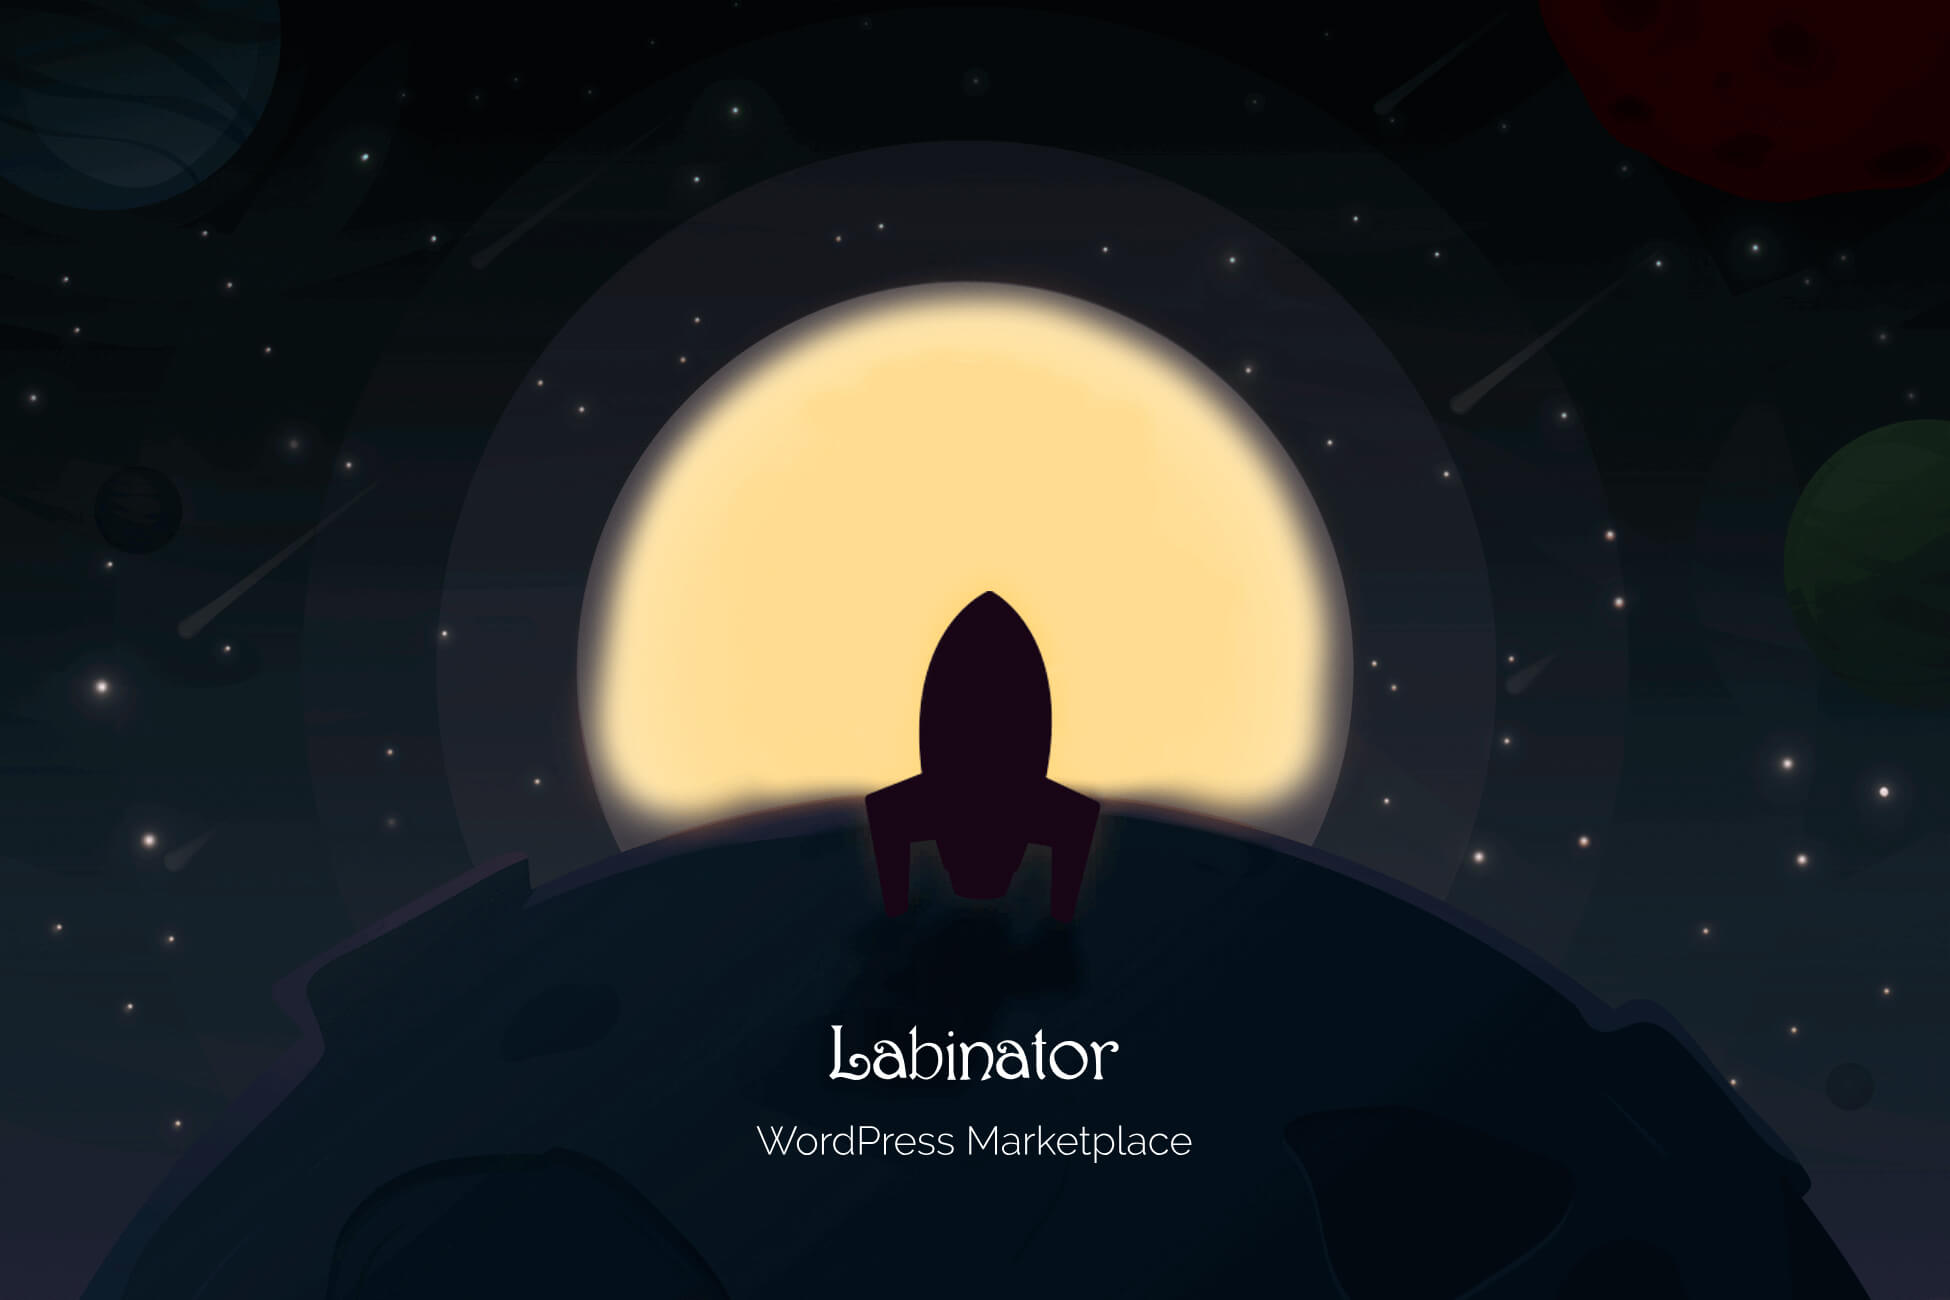 Labinator WordPress Marketplace Hero Image